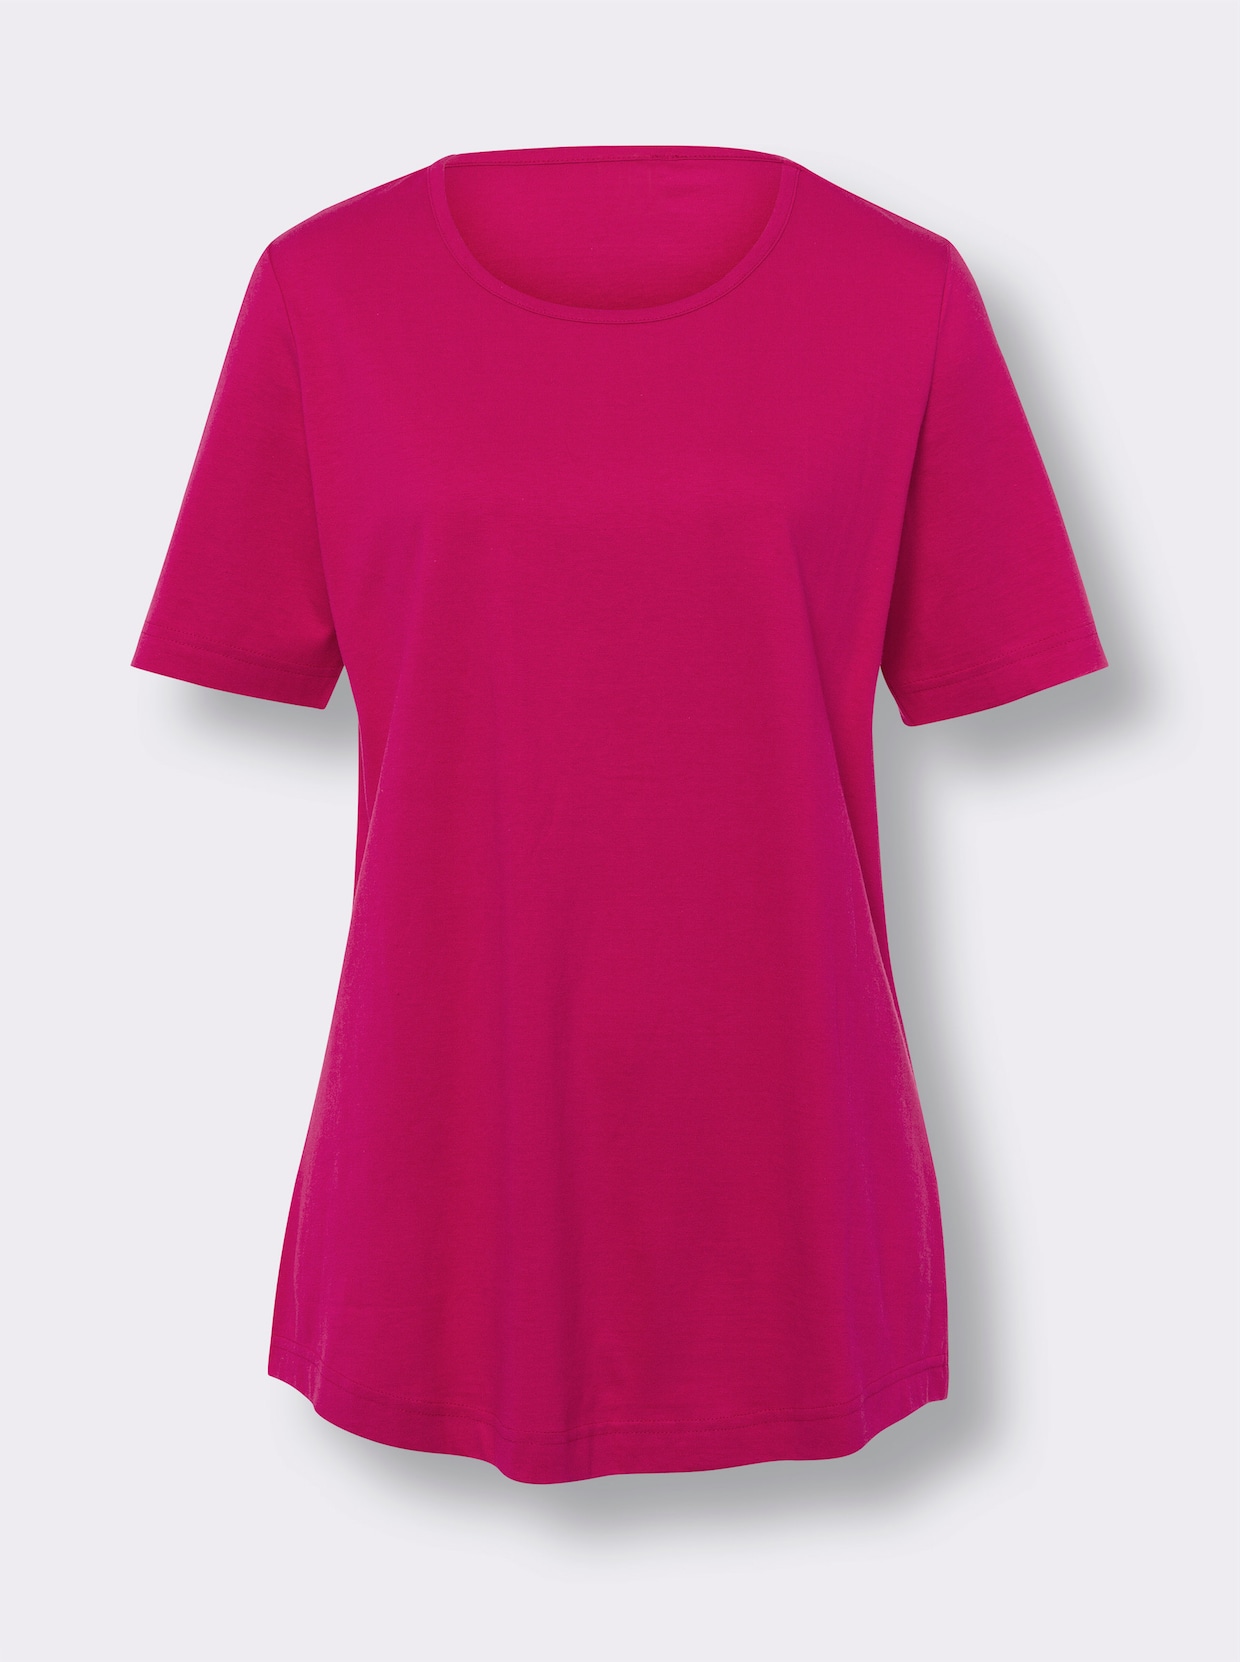 Longshirt - royalblau + pink